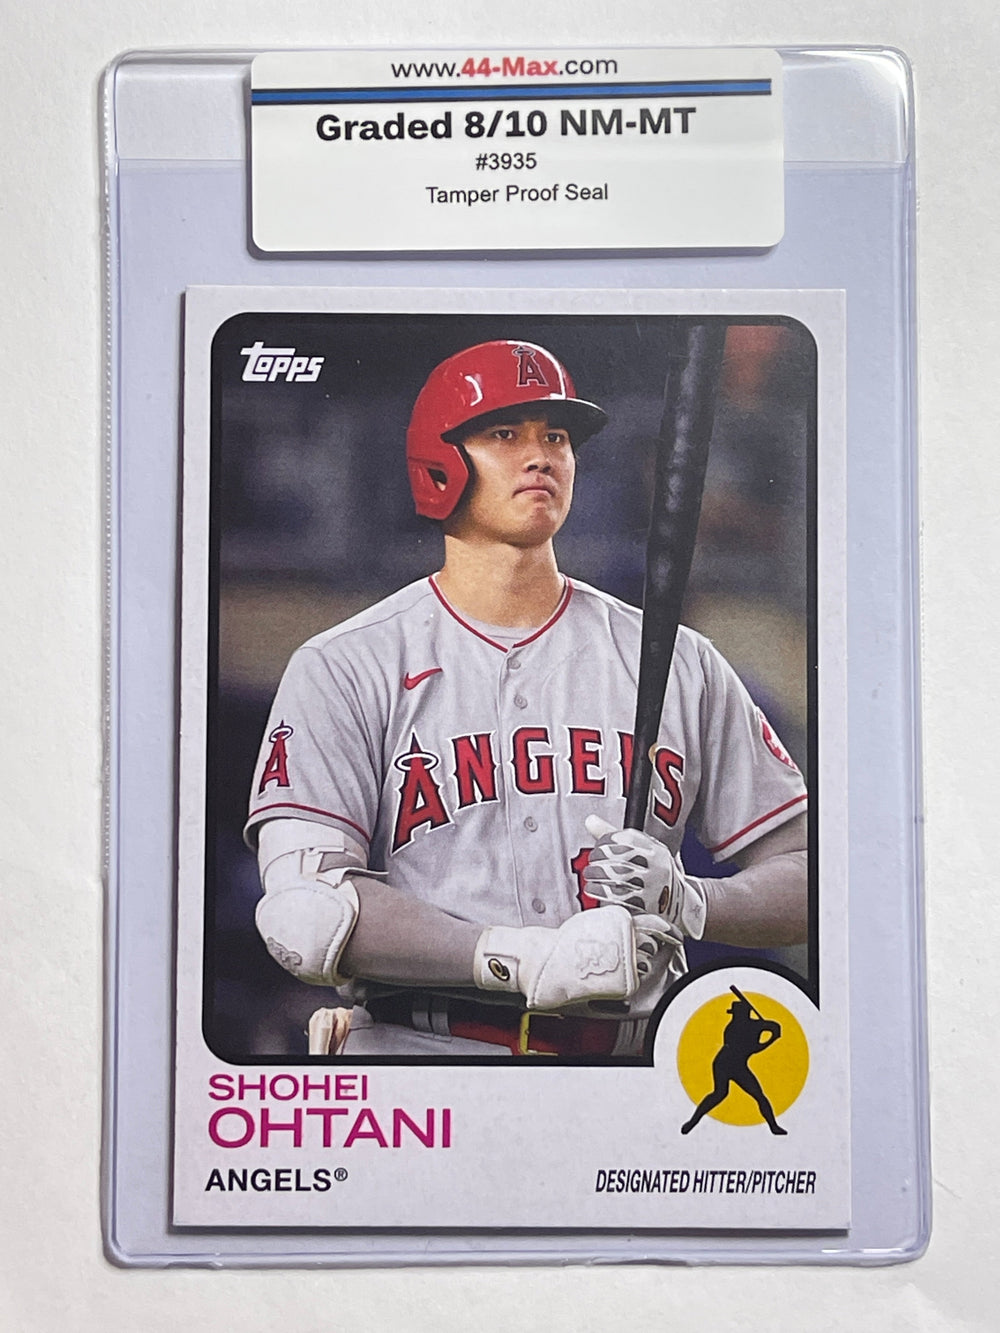 Shohei Ohtani 2021 Topps Baseball Card. 44-Max 8/10 NM-MT #3935